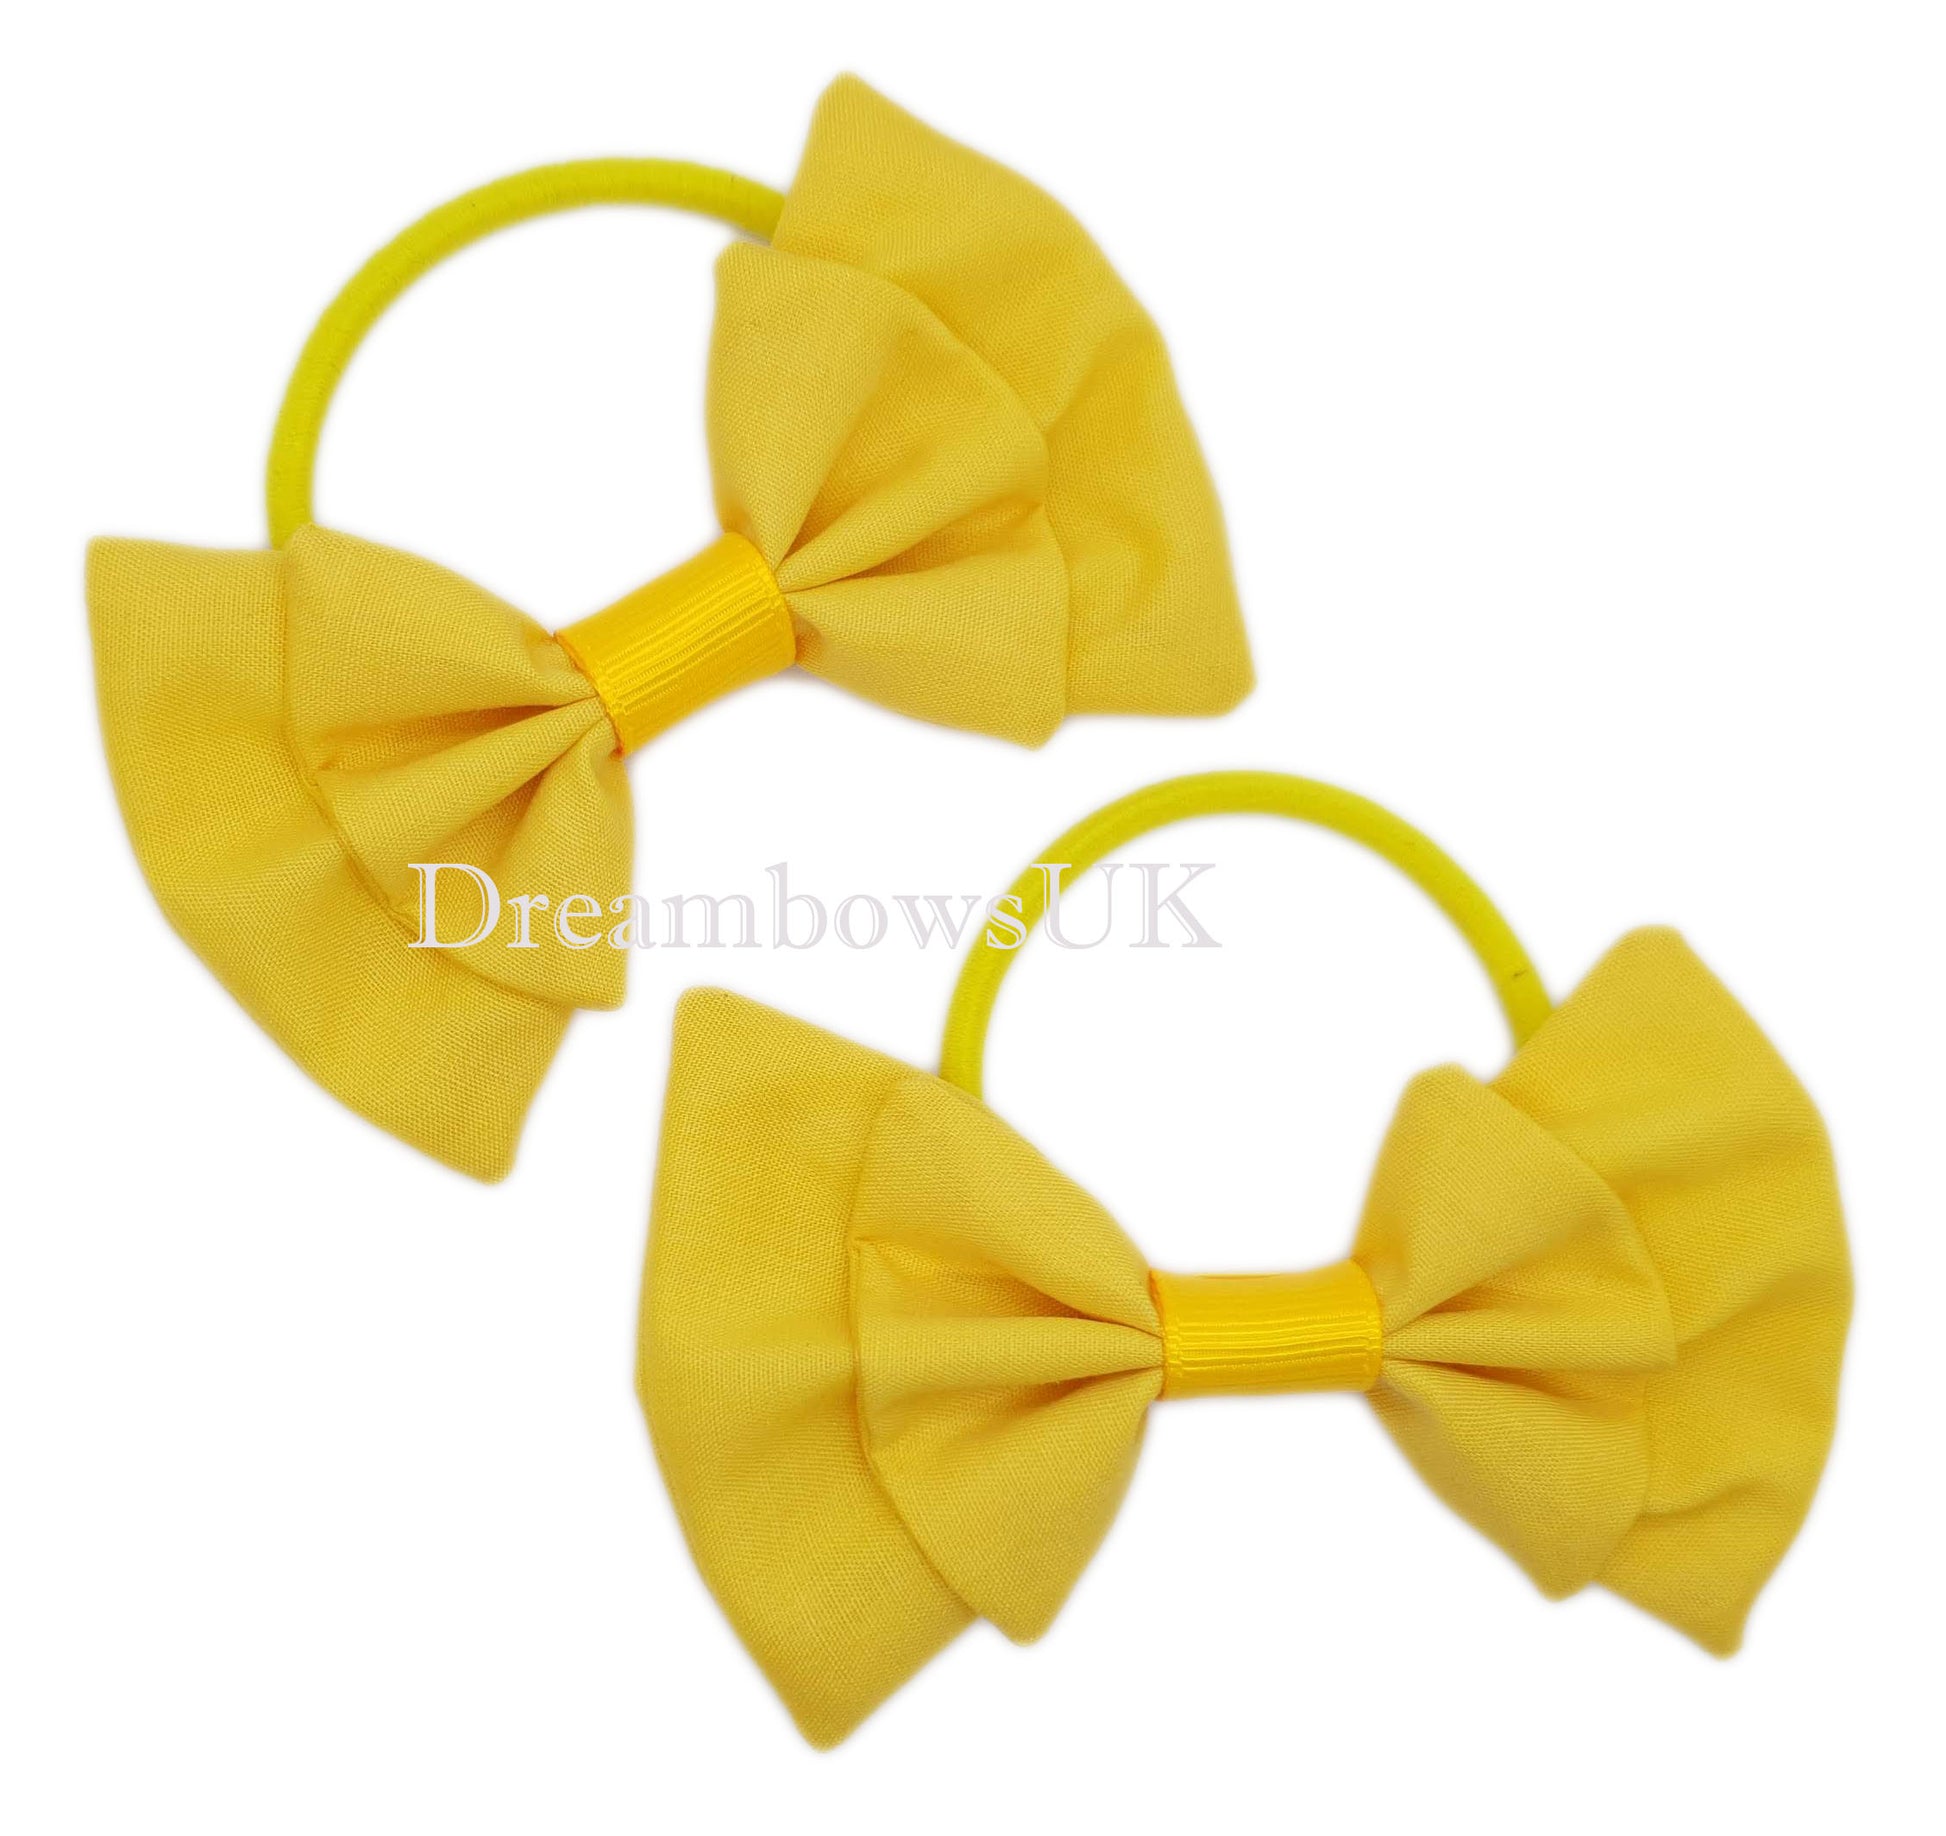 Golden yellow hair accessories for girls